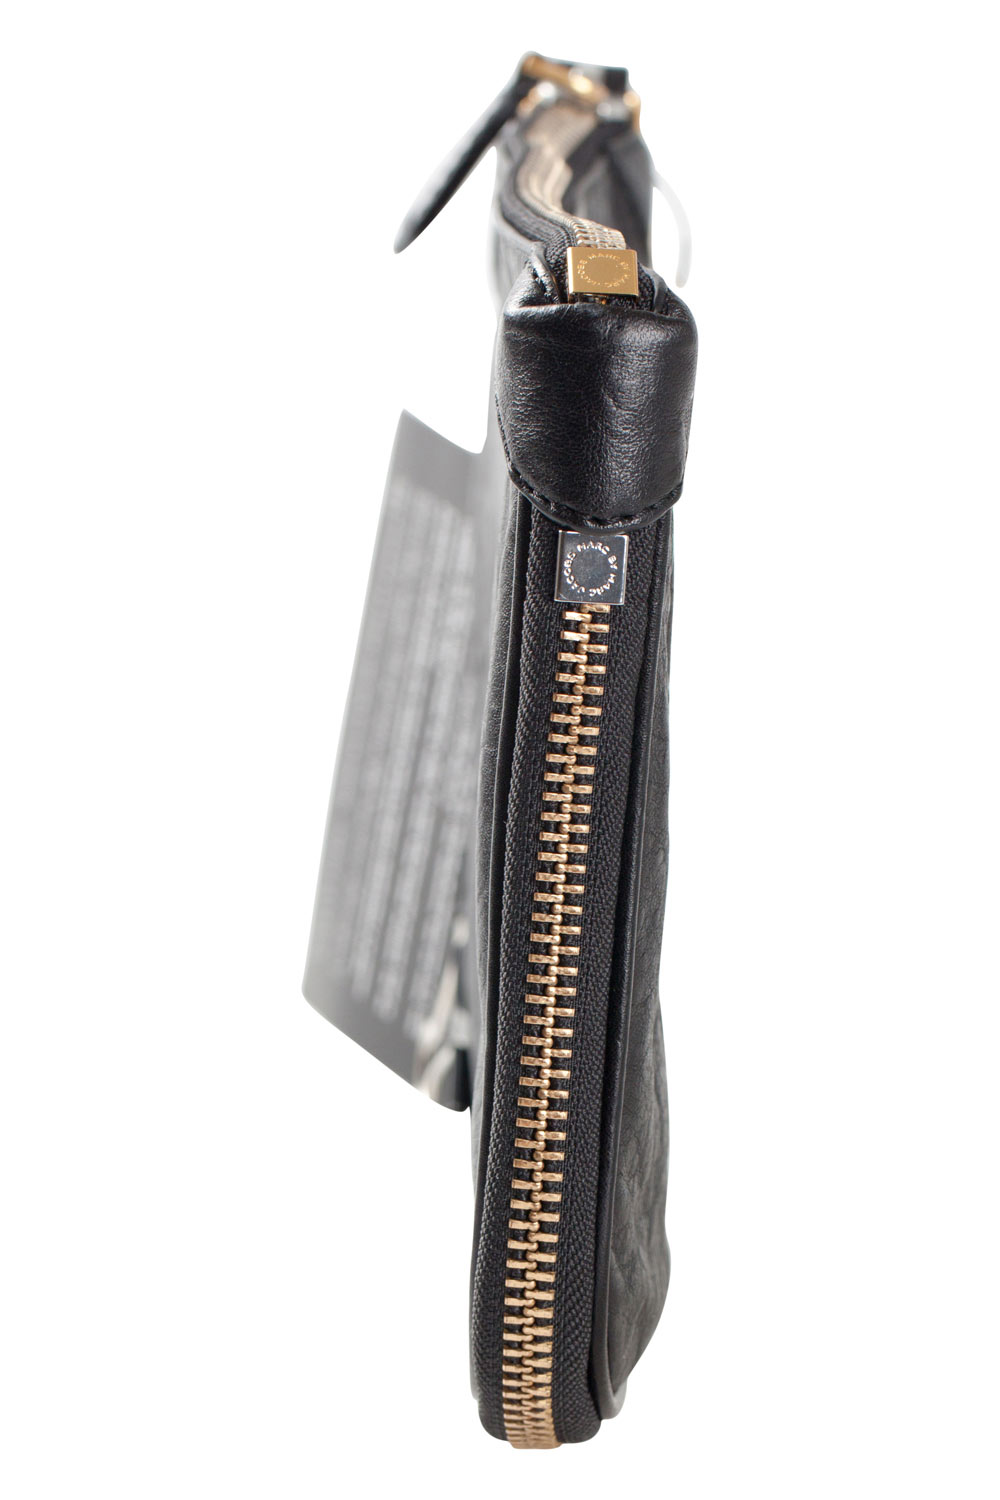 

Marc by Marc Jacobs Black Leather Expandable Zip Wristlet Clutch